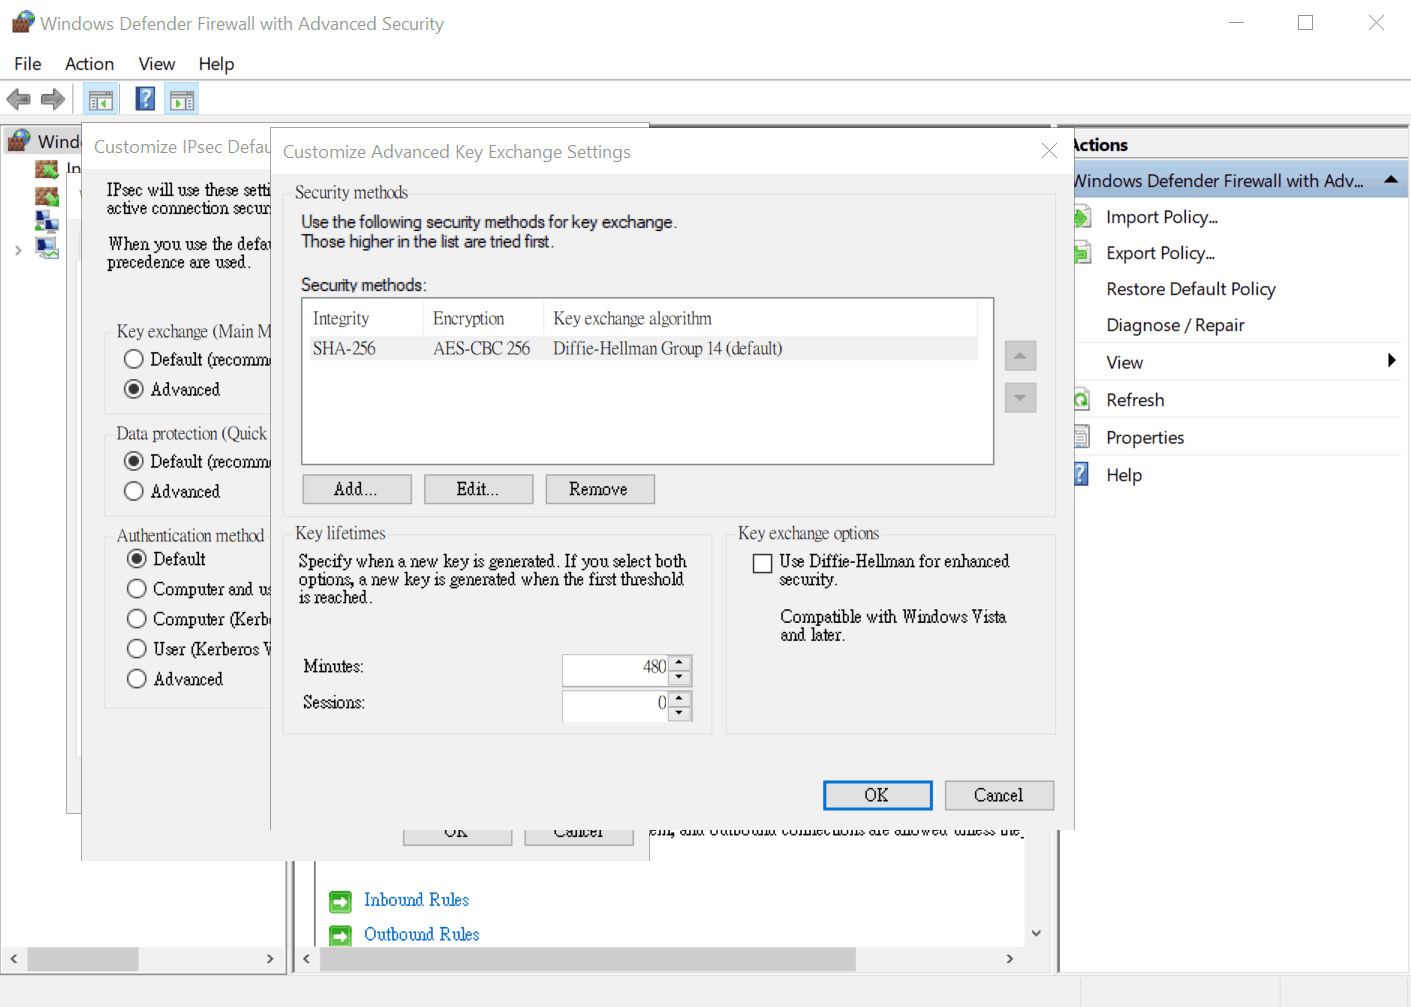 a screenshot of Windows VPN settings